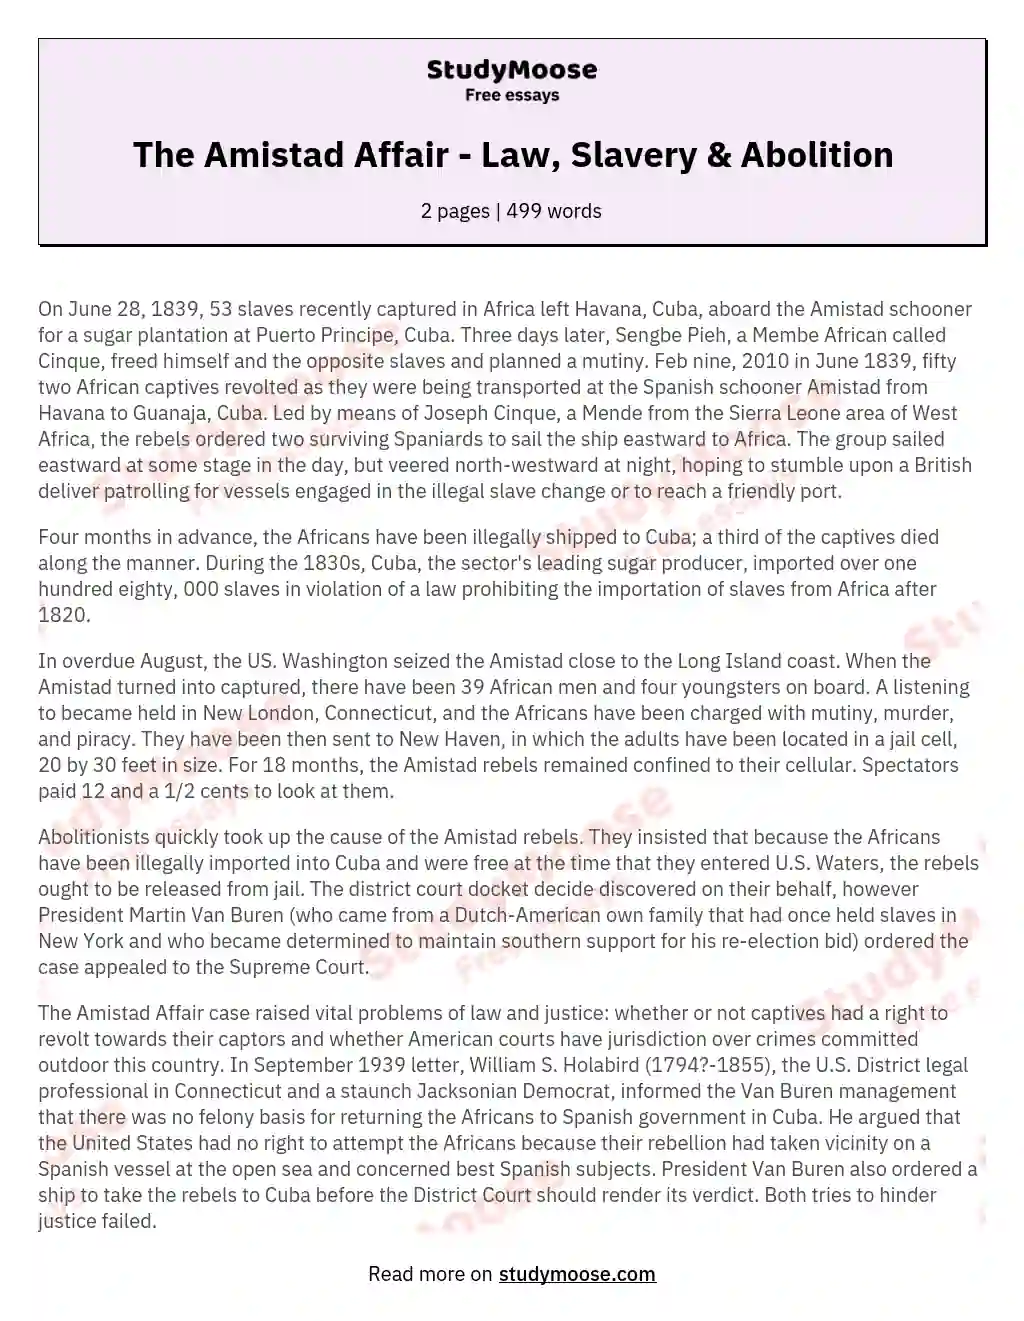 The Amistad Affair - Law, Slavery & Abolition essay